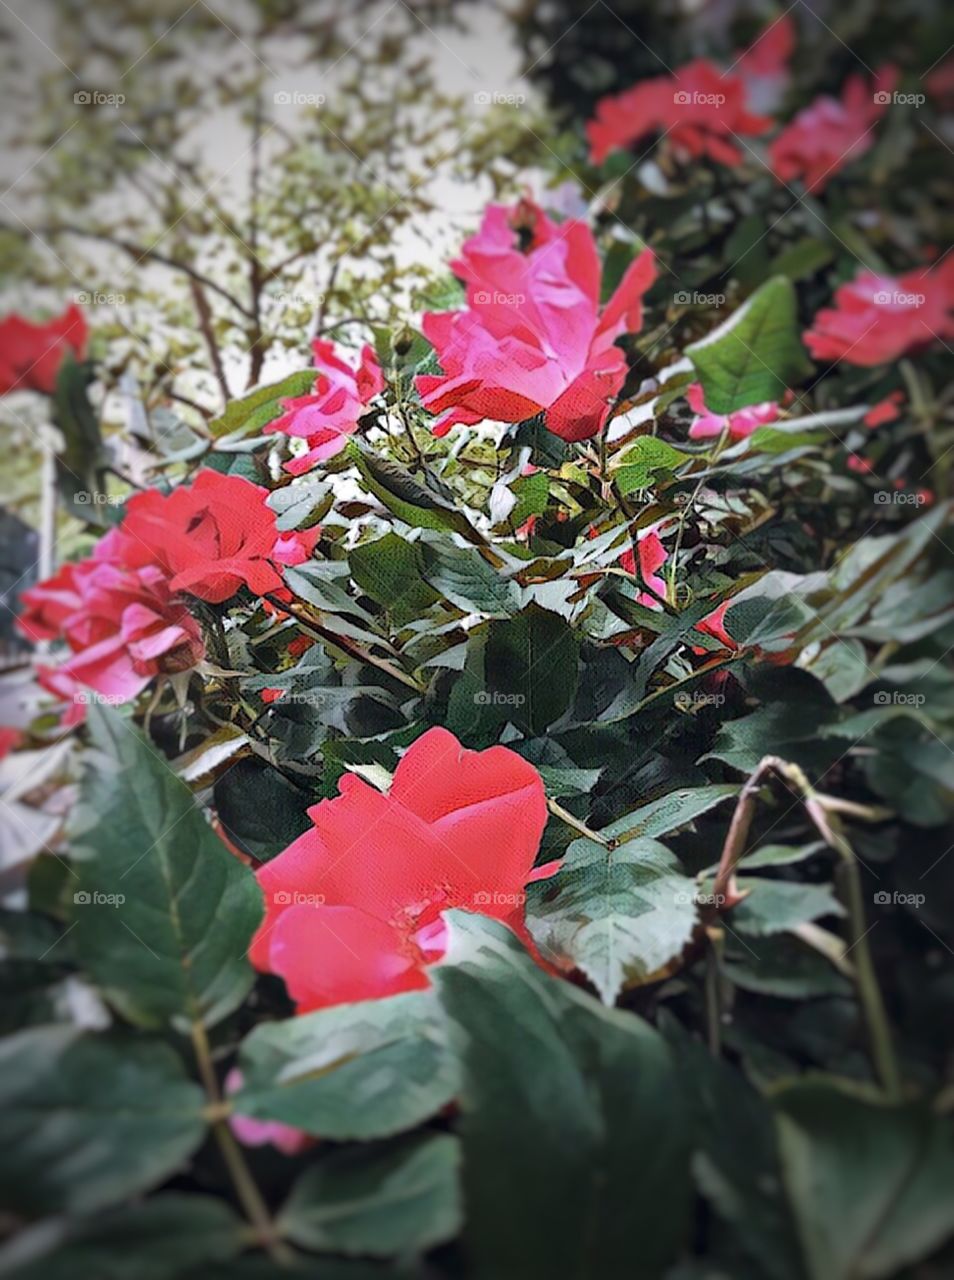 Red Roses - Dewitt Clinton Park, Manhattan, New York City. Instagram,@PennyPeronto